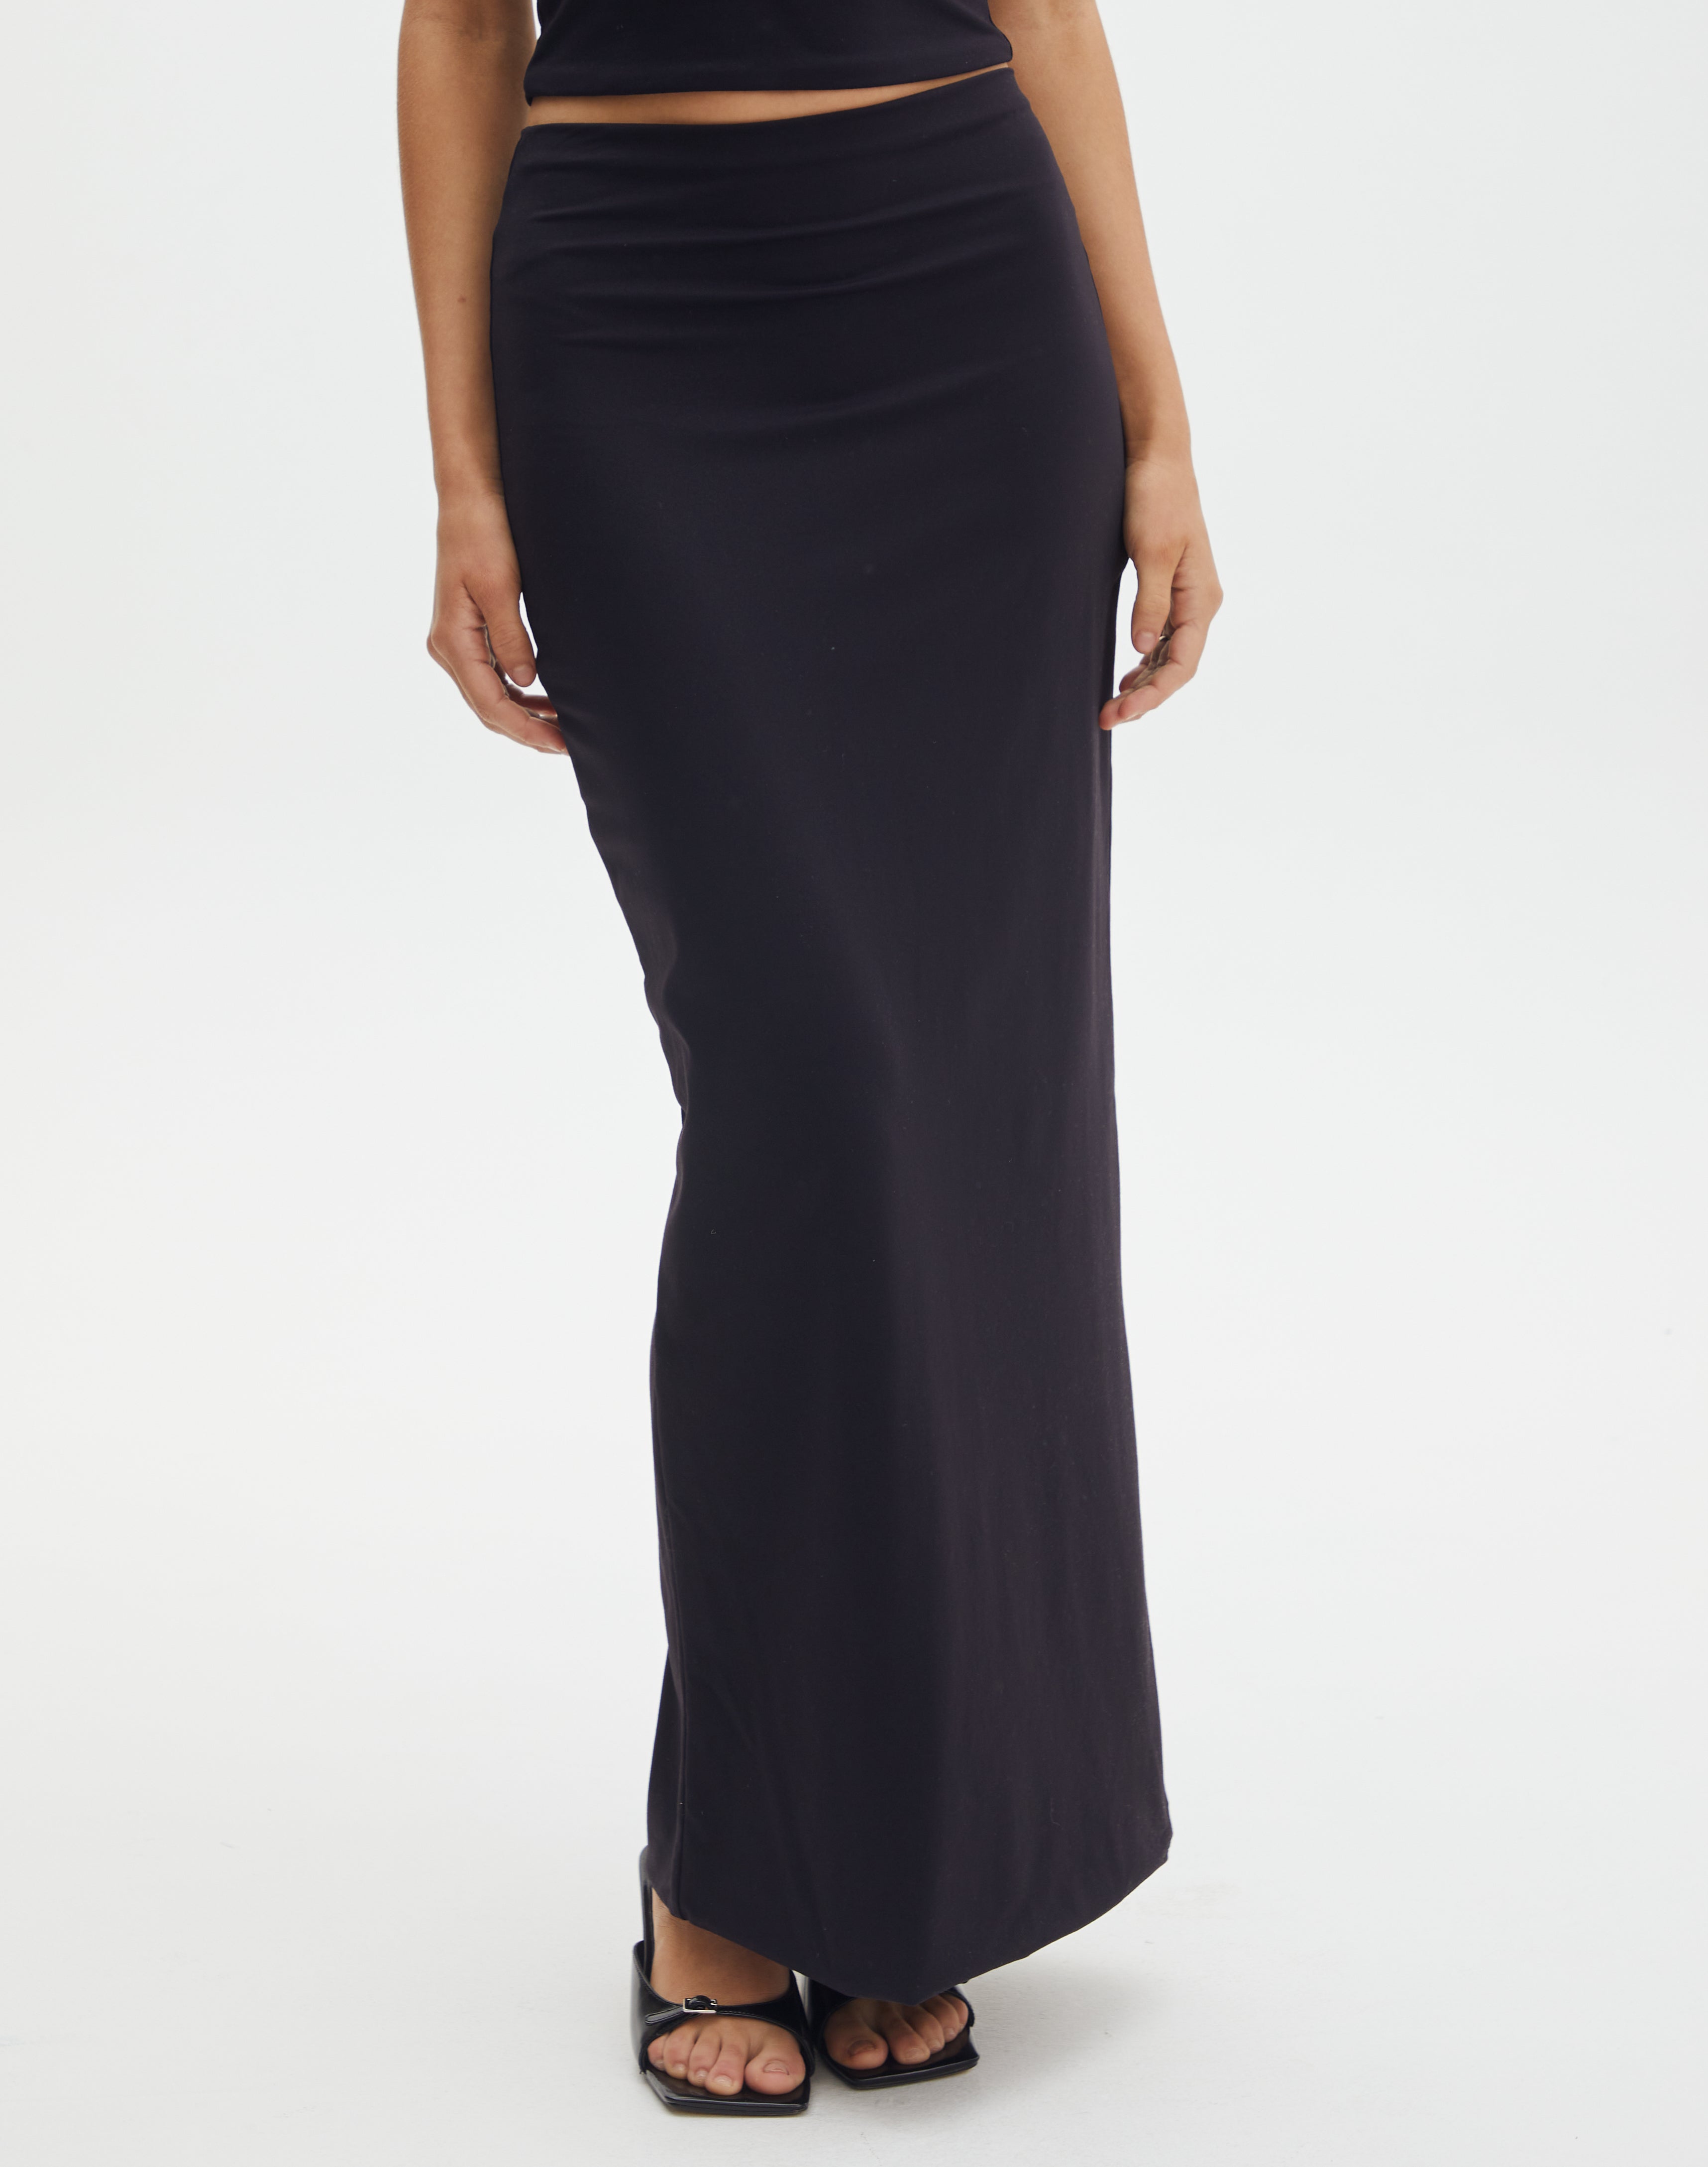 Black Maxi Skirt | Black Maxi Skirts Online | Buy Women's Black Maxi Skirts  Australia |- THE ICONIC